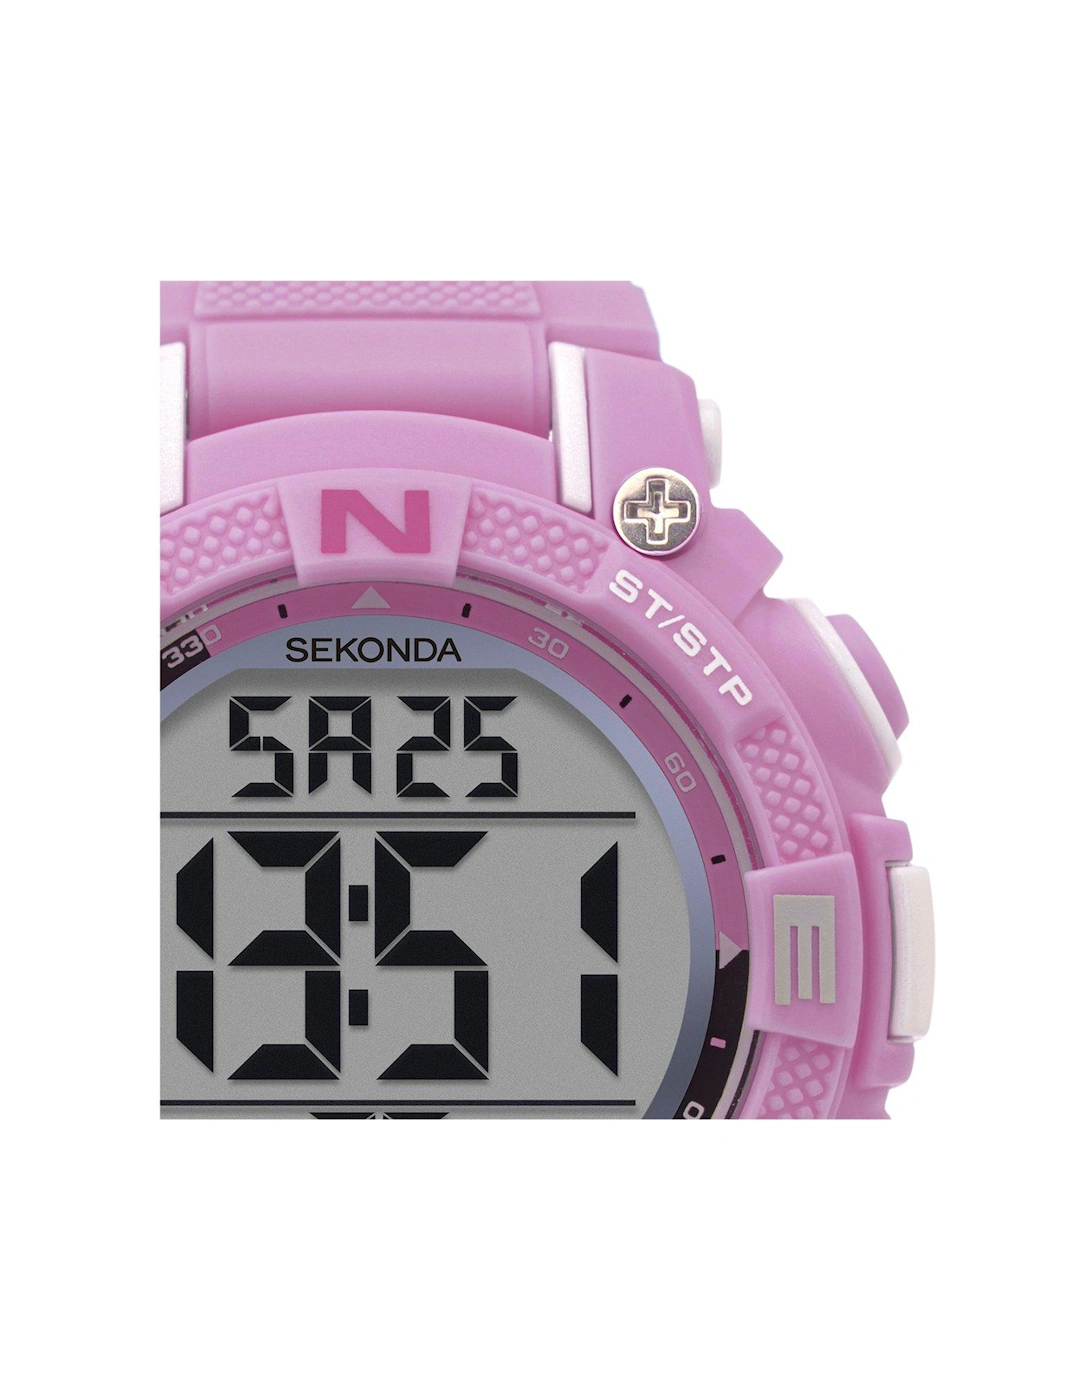 Ladies Digital Pink Plastic Strap with Pink Dial Watch